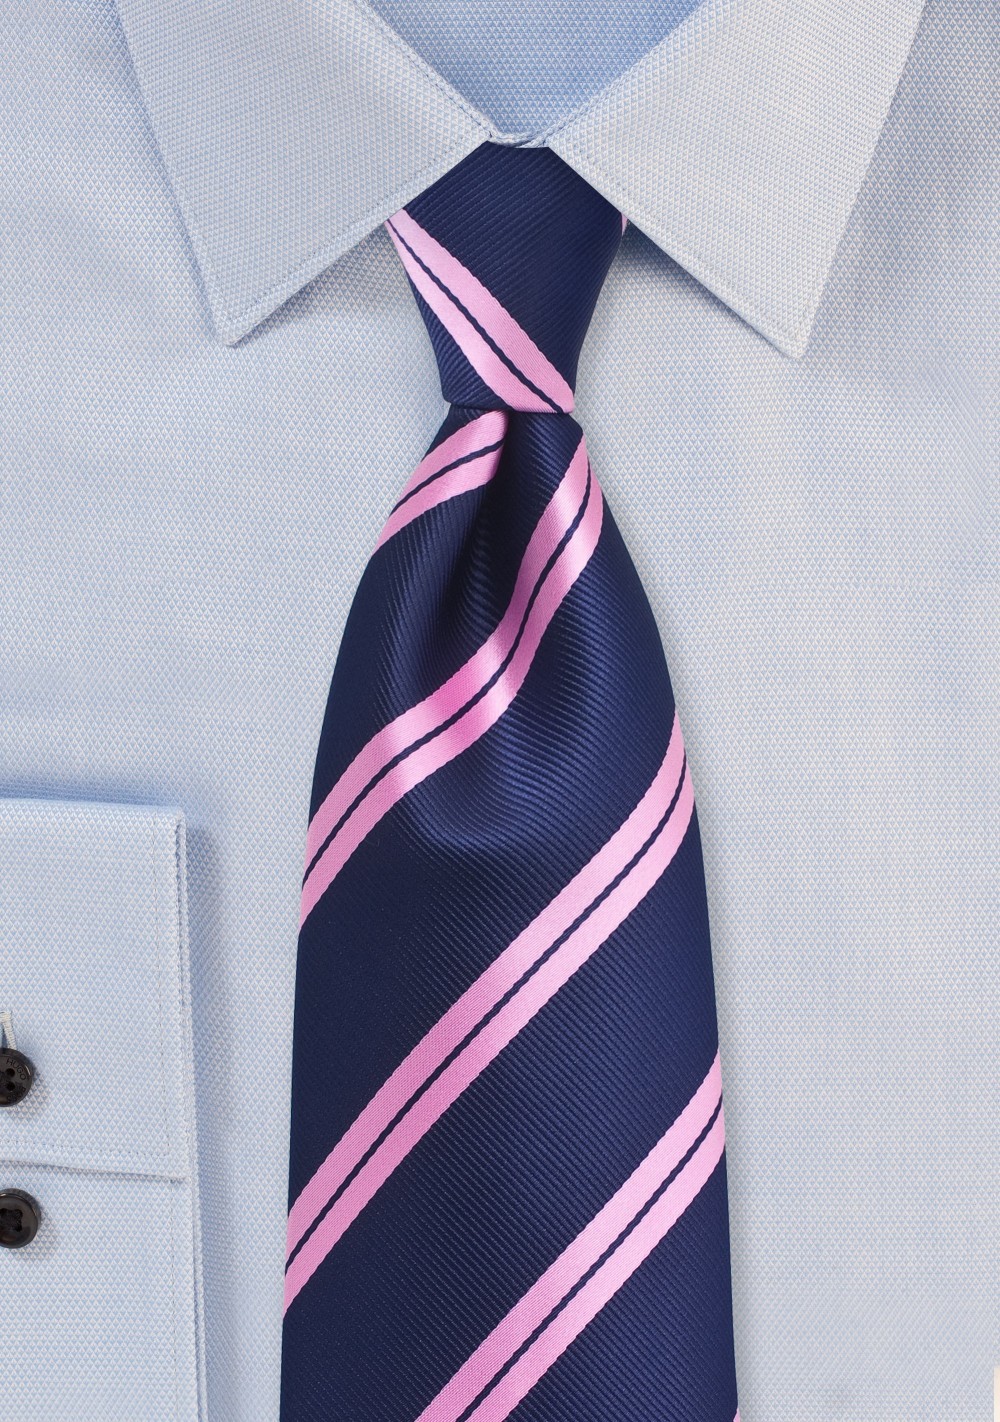 Summer Repp Tie in Pink and Navy